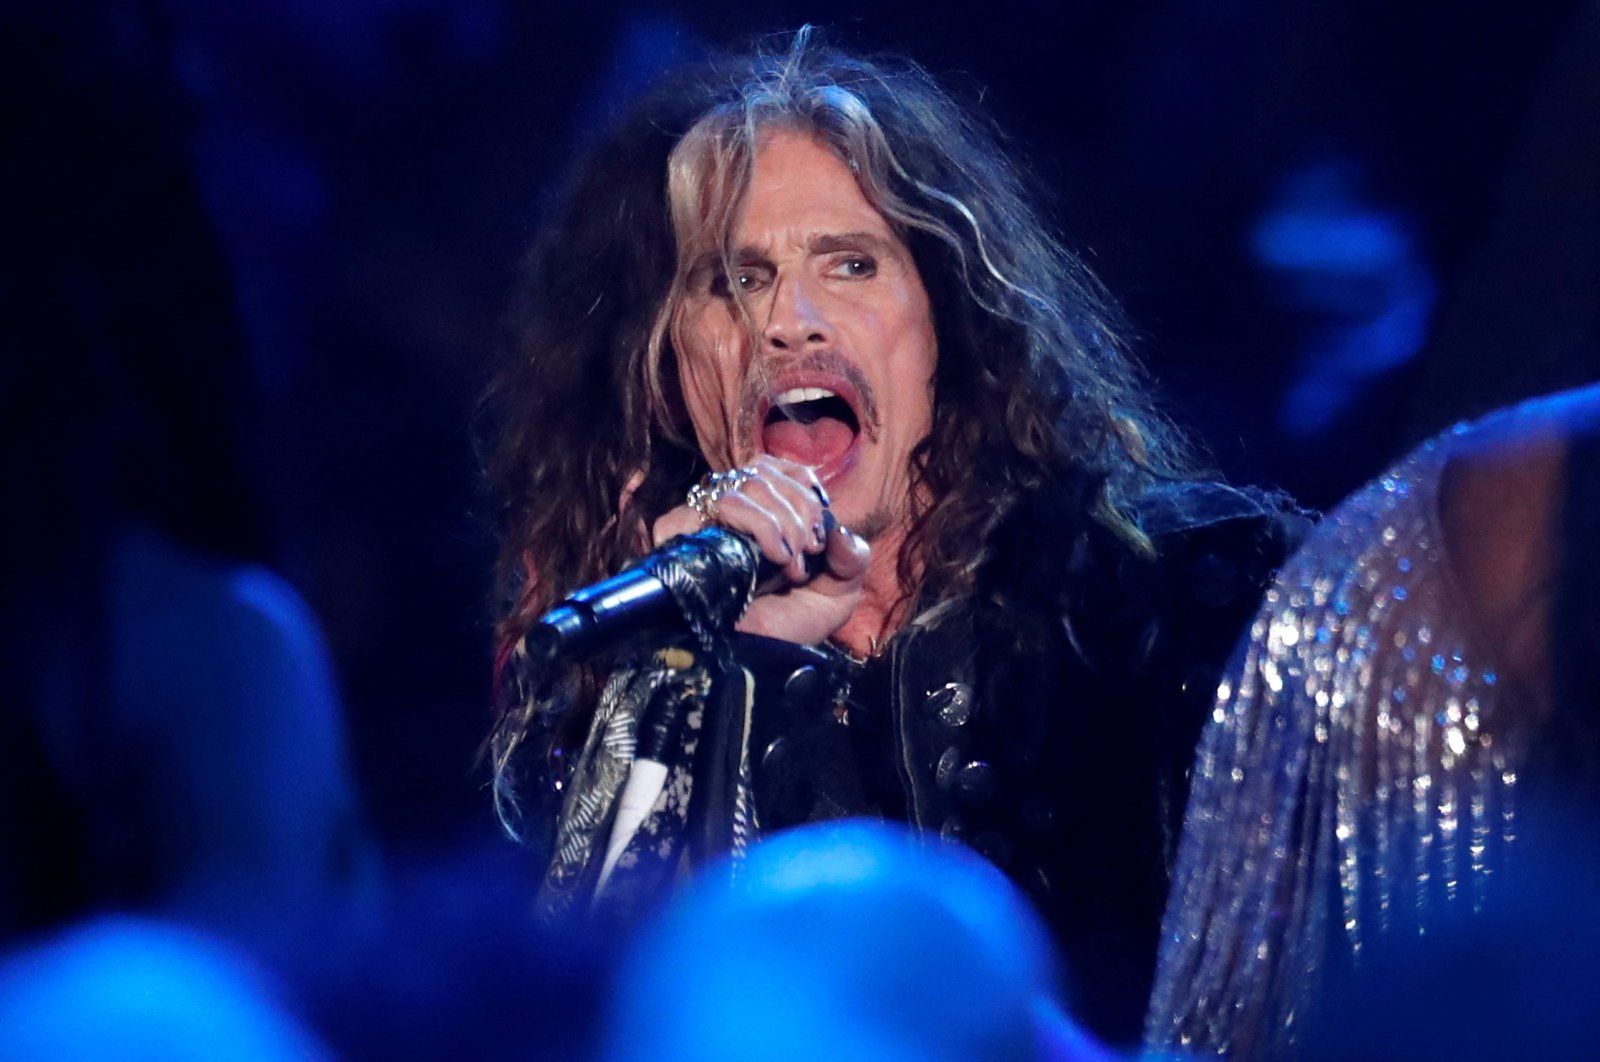 Penyanyi Steven Tyler masuk rehabilitasi, Aerosmith batalkan konser